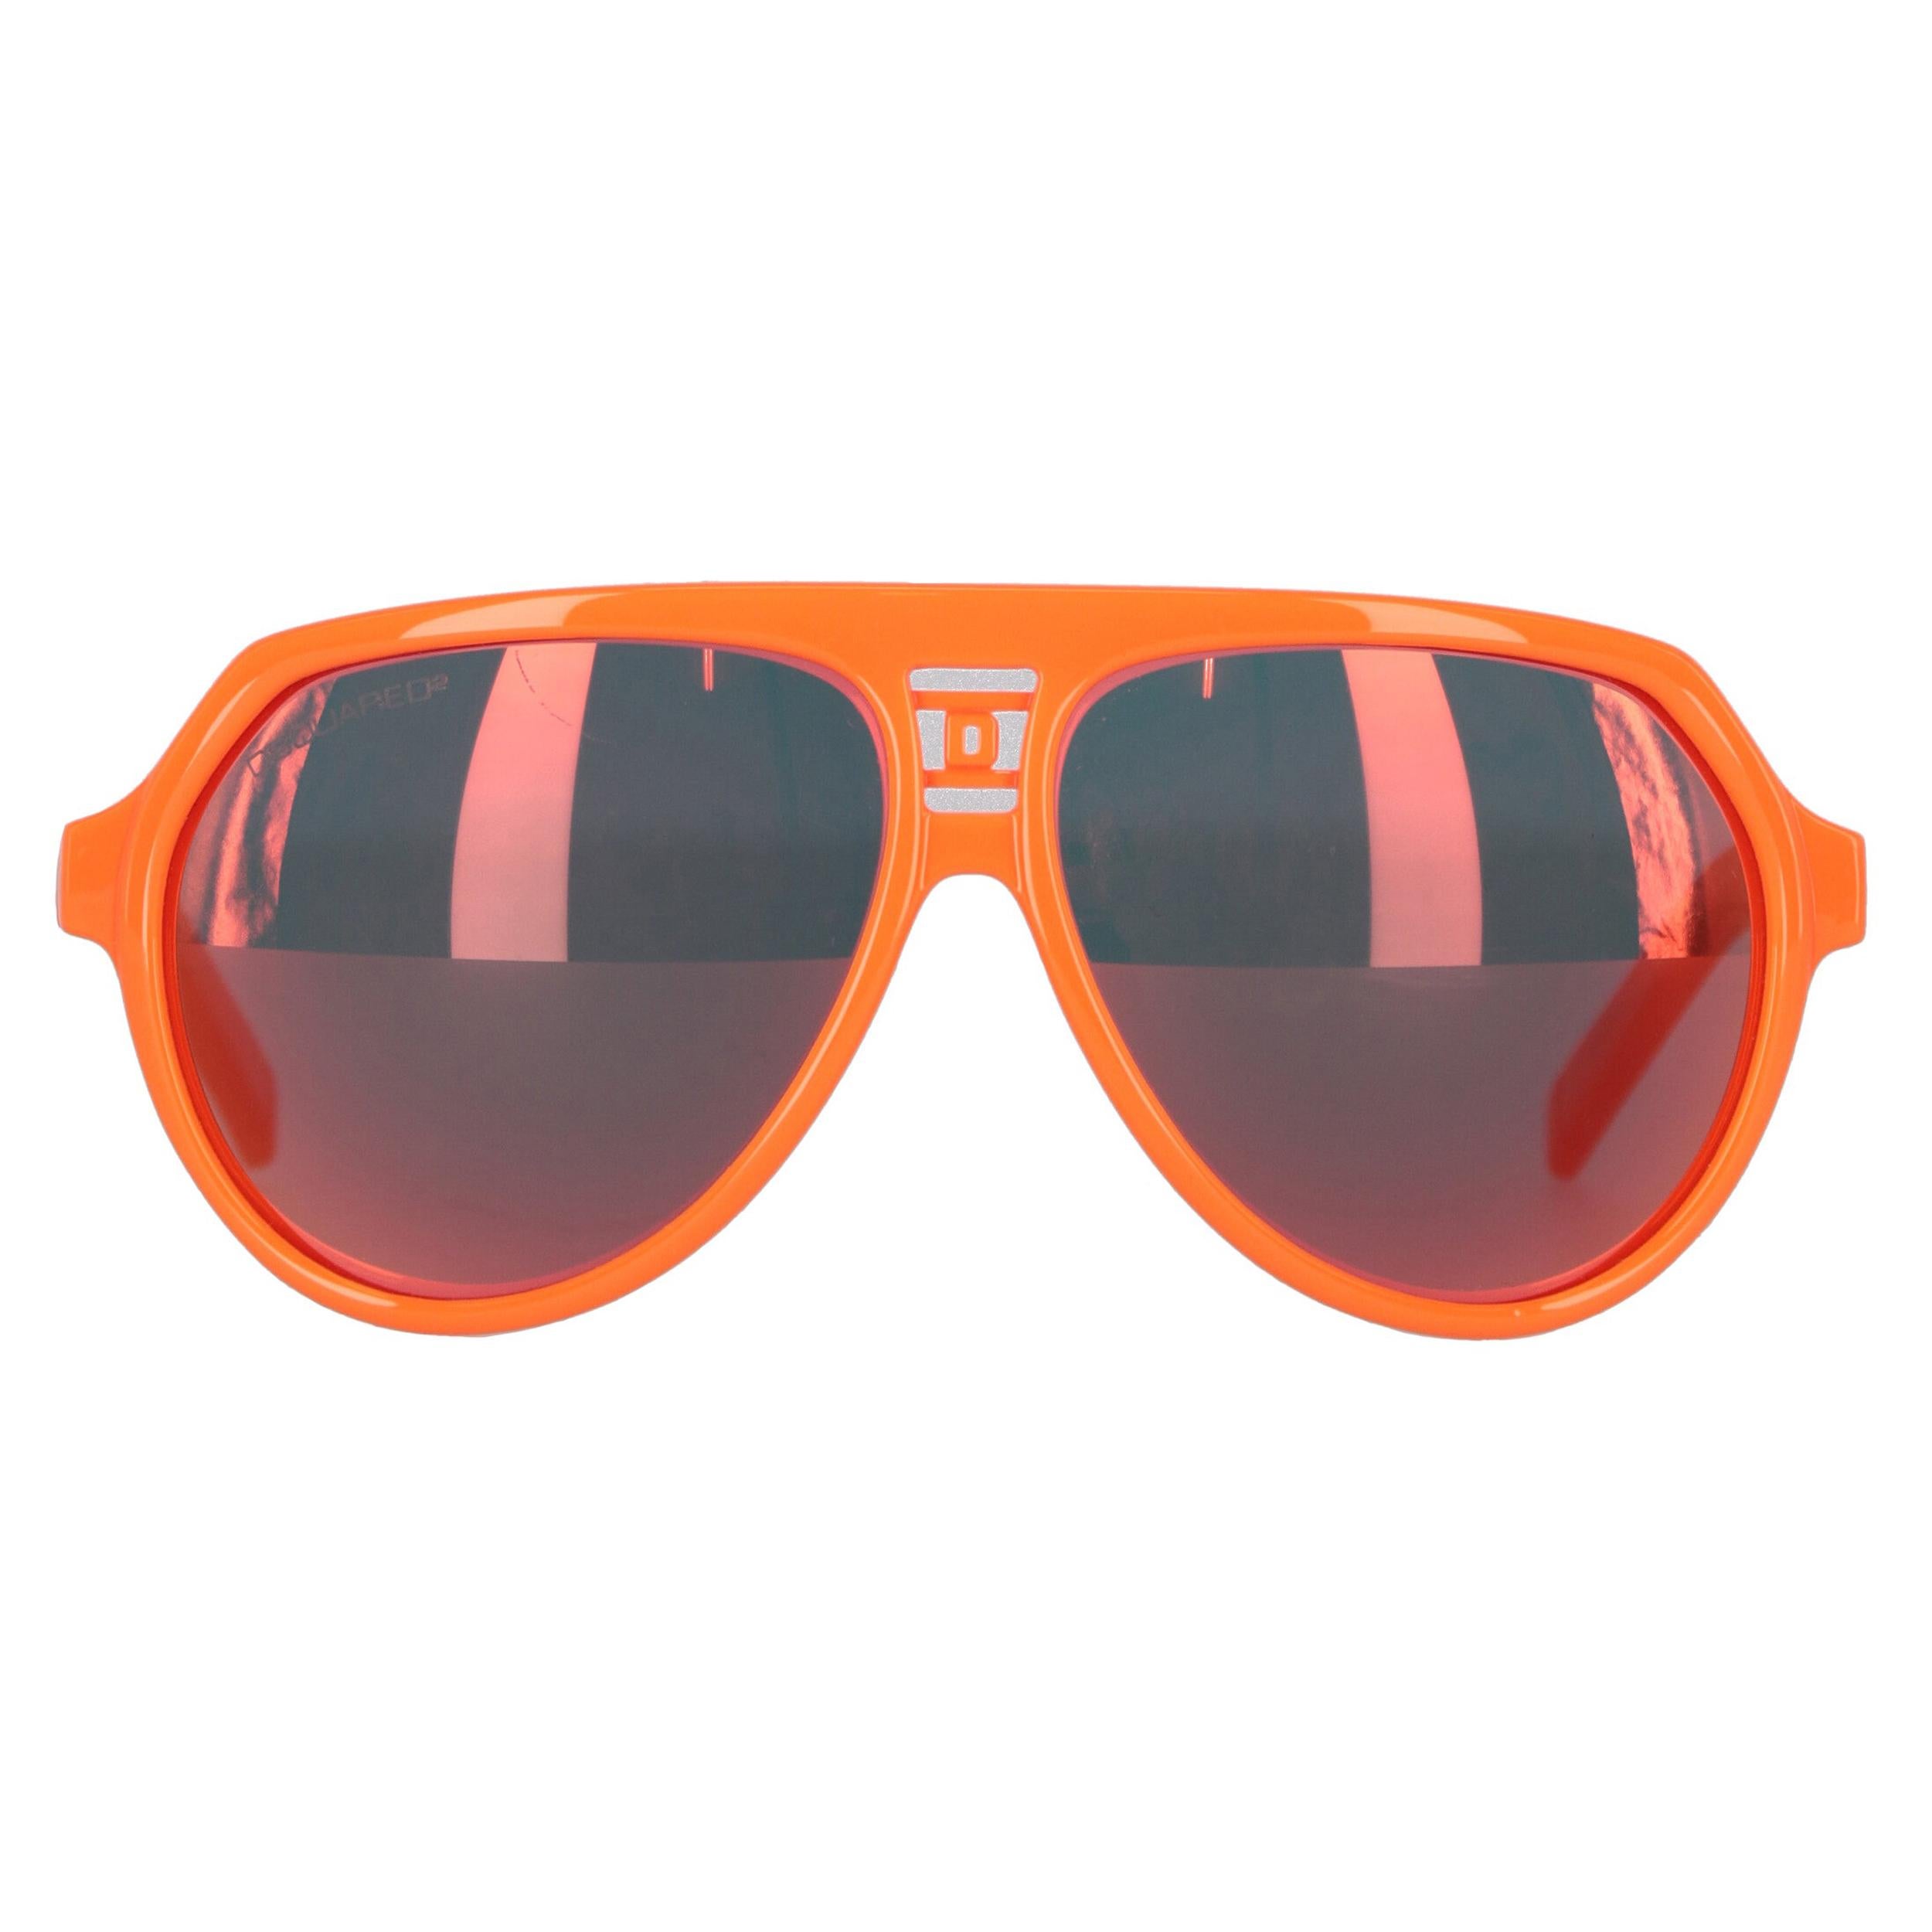 2010s Dsquared2 Orange Mask Sunglasses